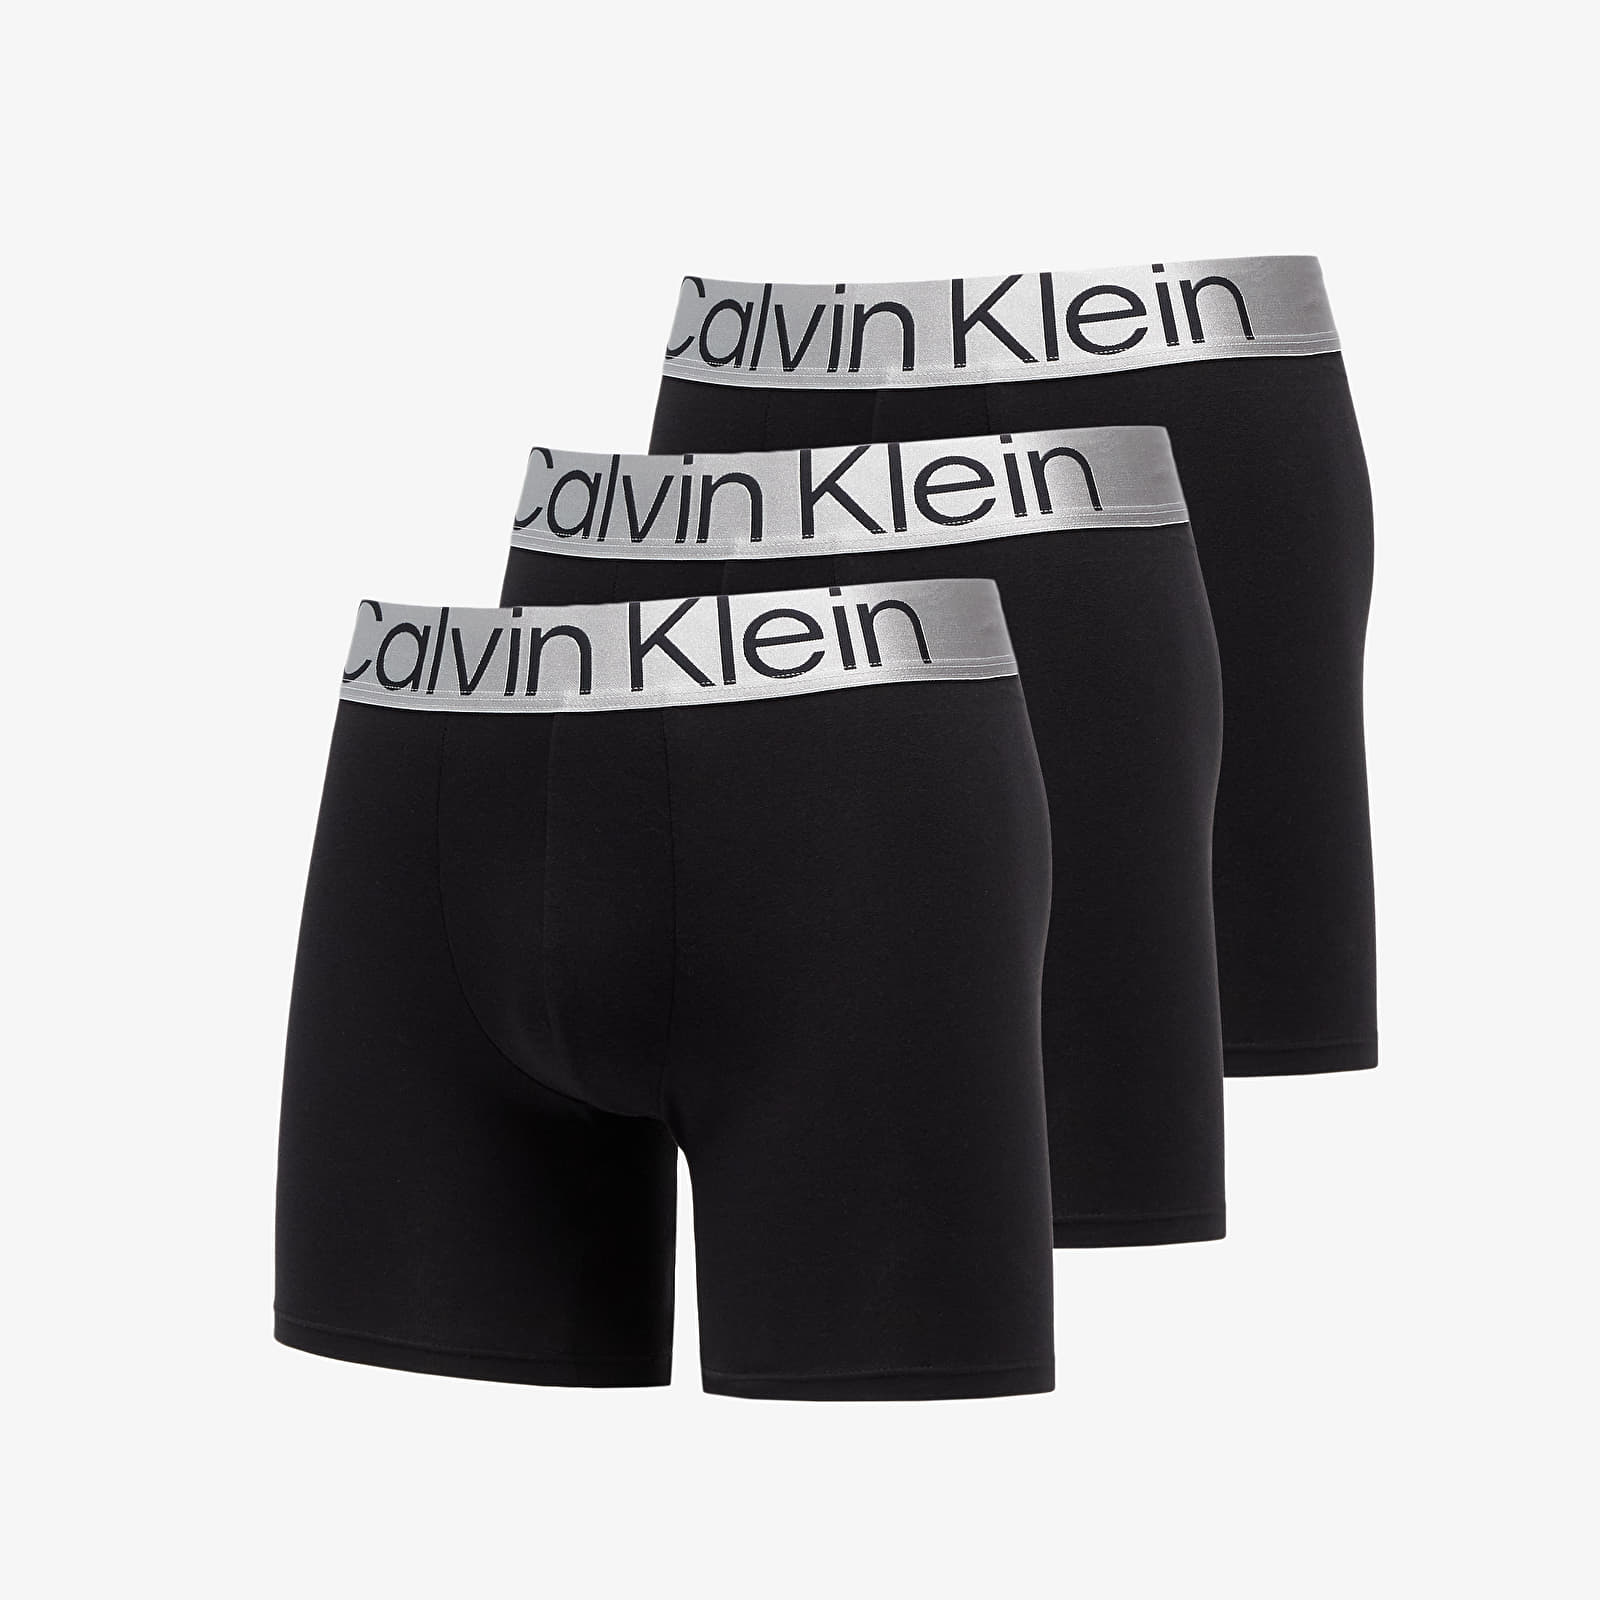 Boxer shorts Calvin Klein Ckr Steel Cotton Boxer Brief 3-Pack Black